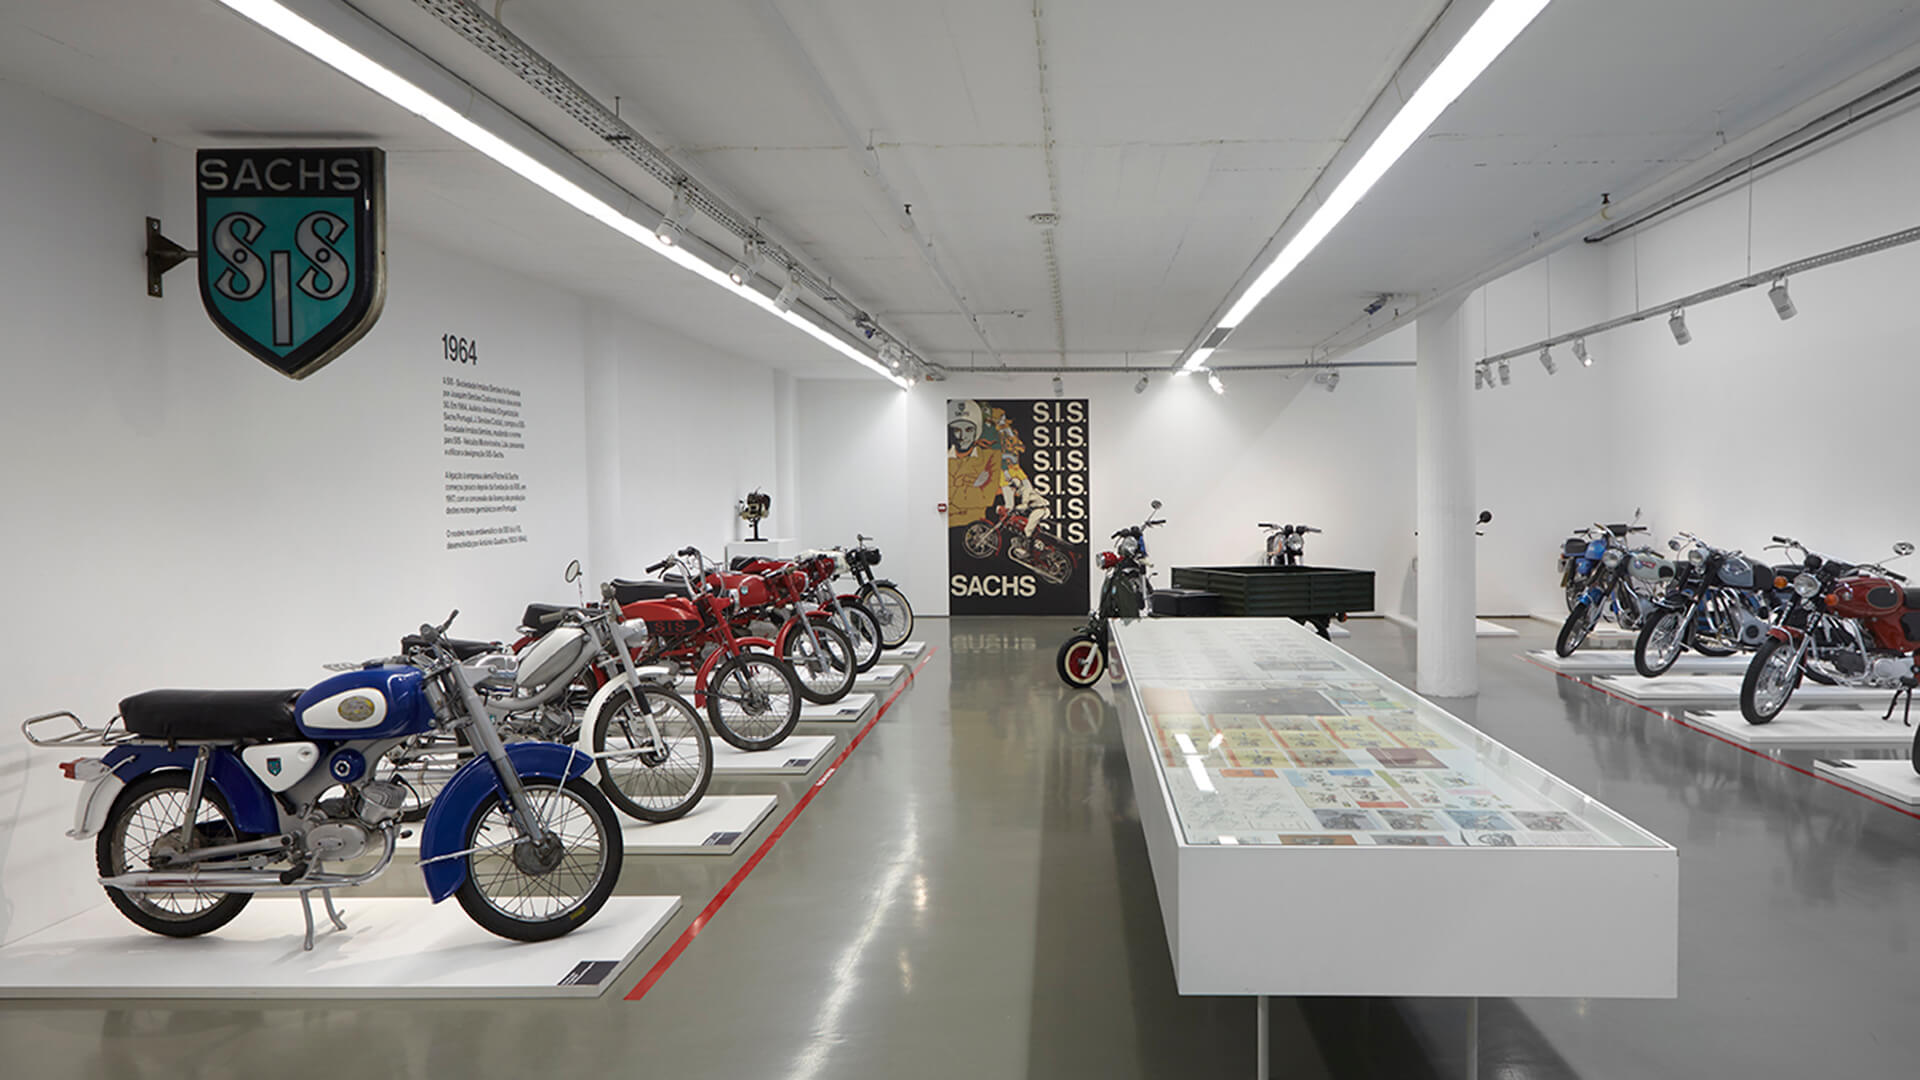 Exposition Temporaire “Motos de Portugal”, 2017-18